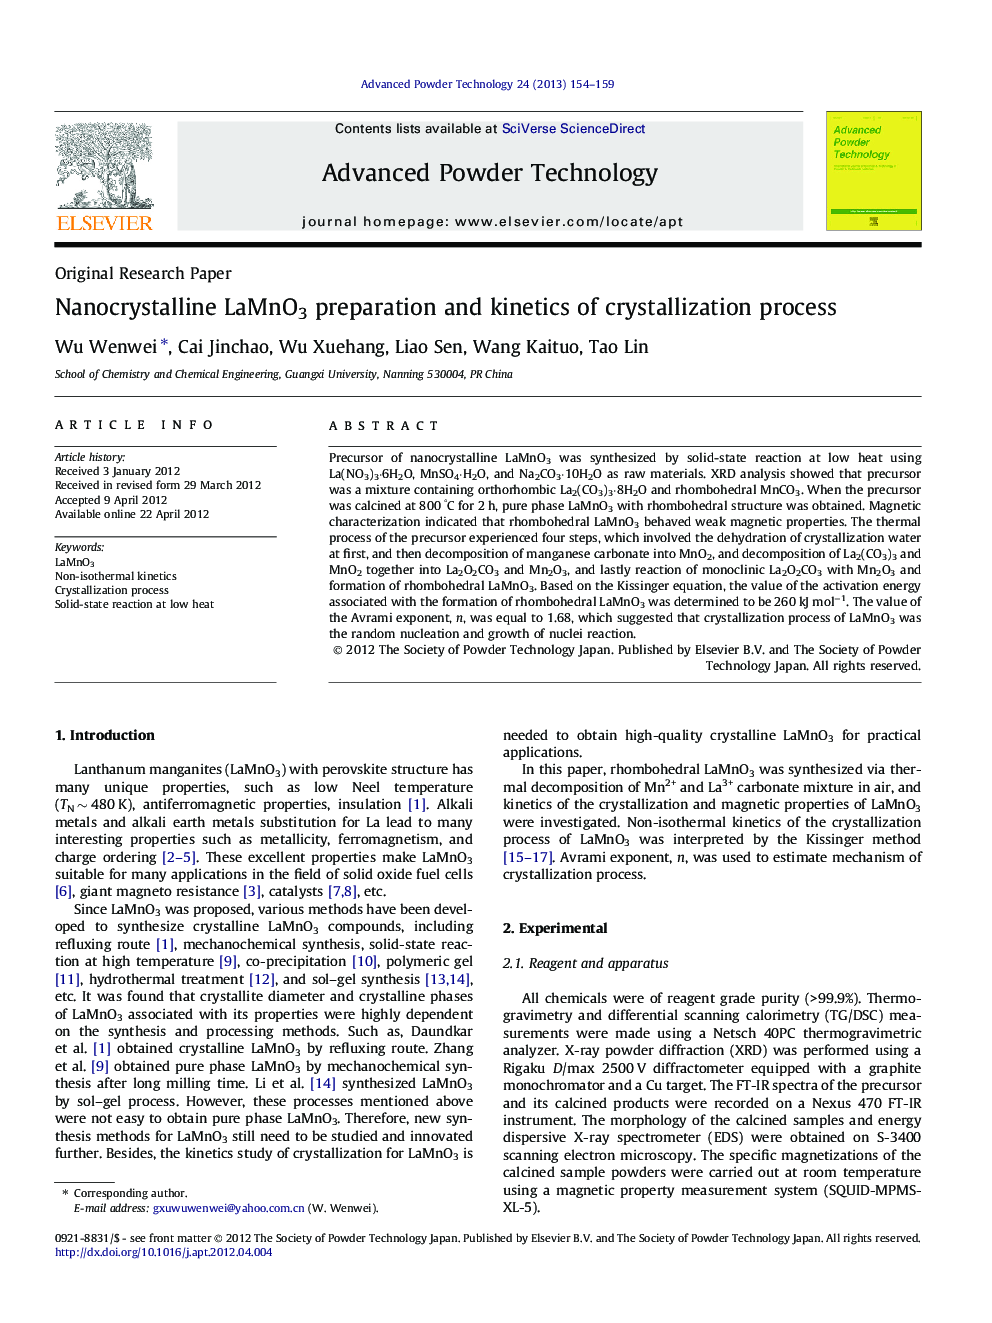 Nanocrystalline LaMnO3 preparation and kinetics of crystallization process